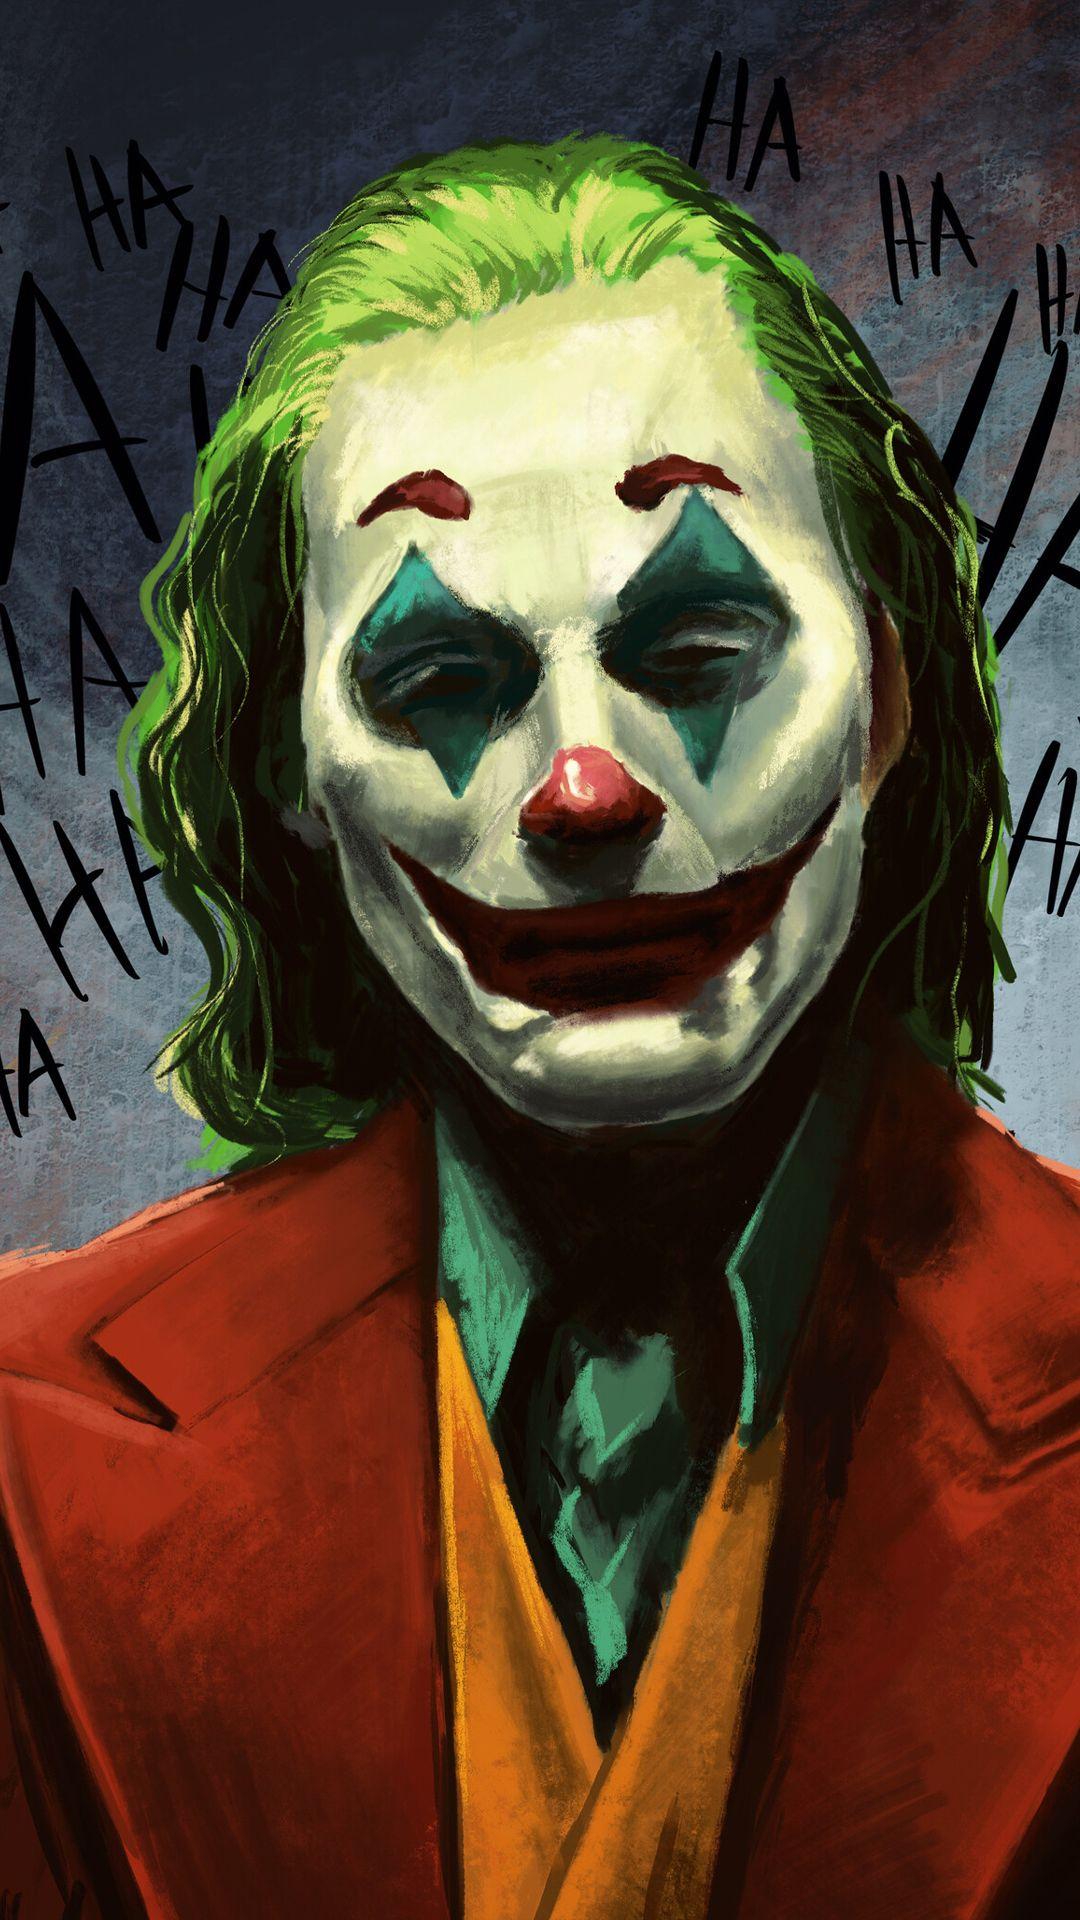 Original Joker Wallpapers - Top Free Original Joker Backgrounds ...